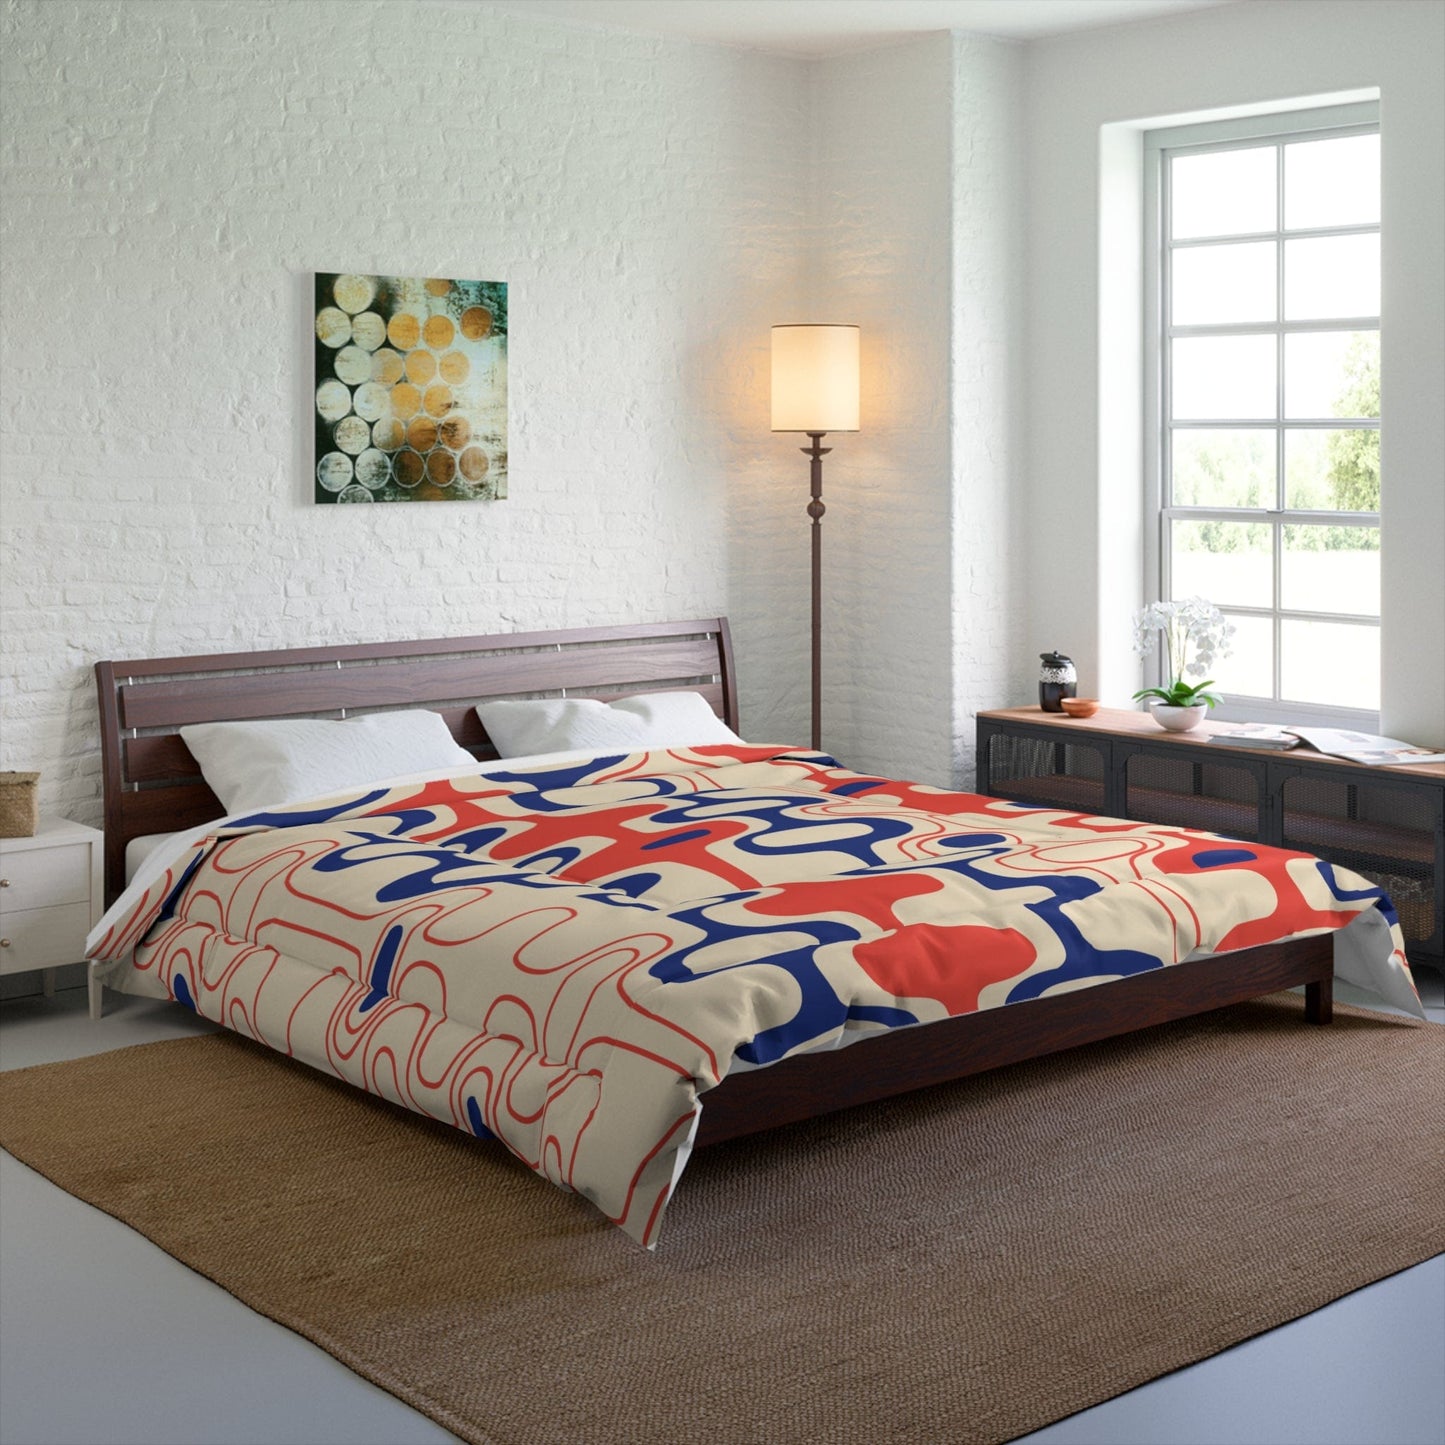 Kate McEnroe New York Retro Geometric Mid Mod Comforter Comforters 104" × 88" 46025880596819026813